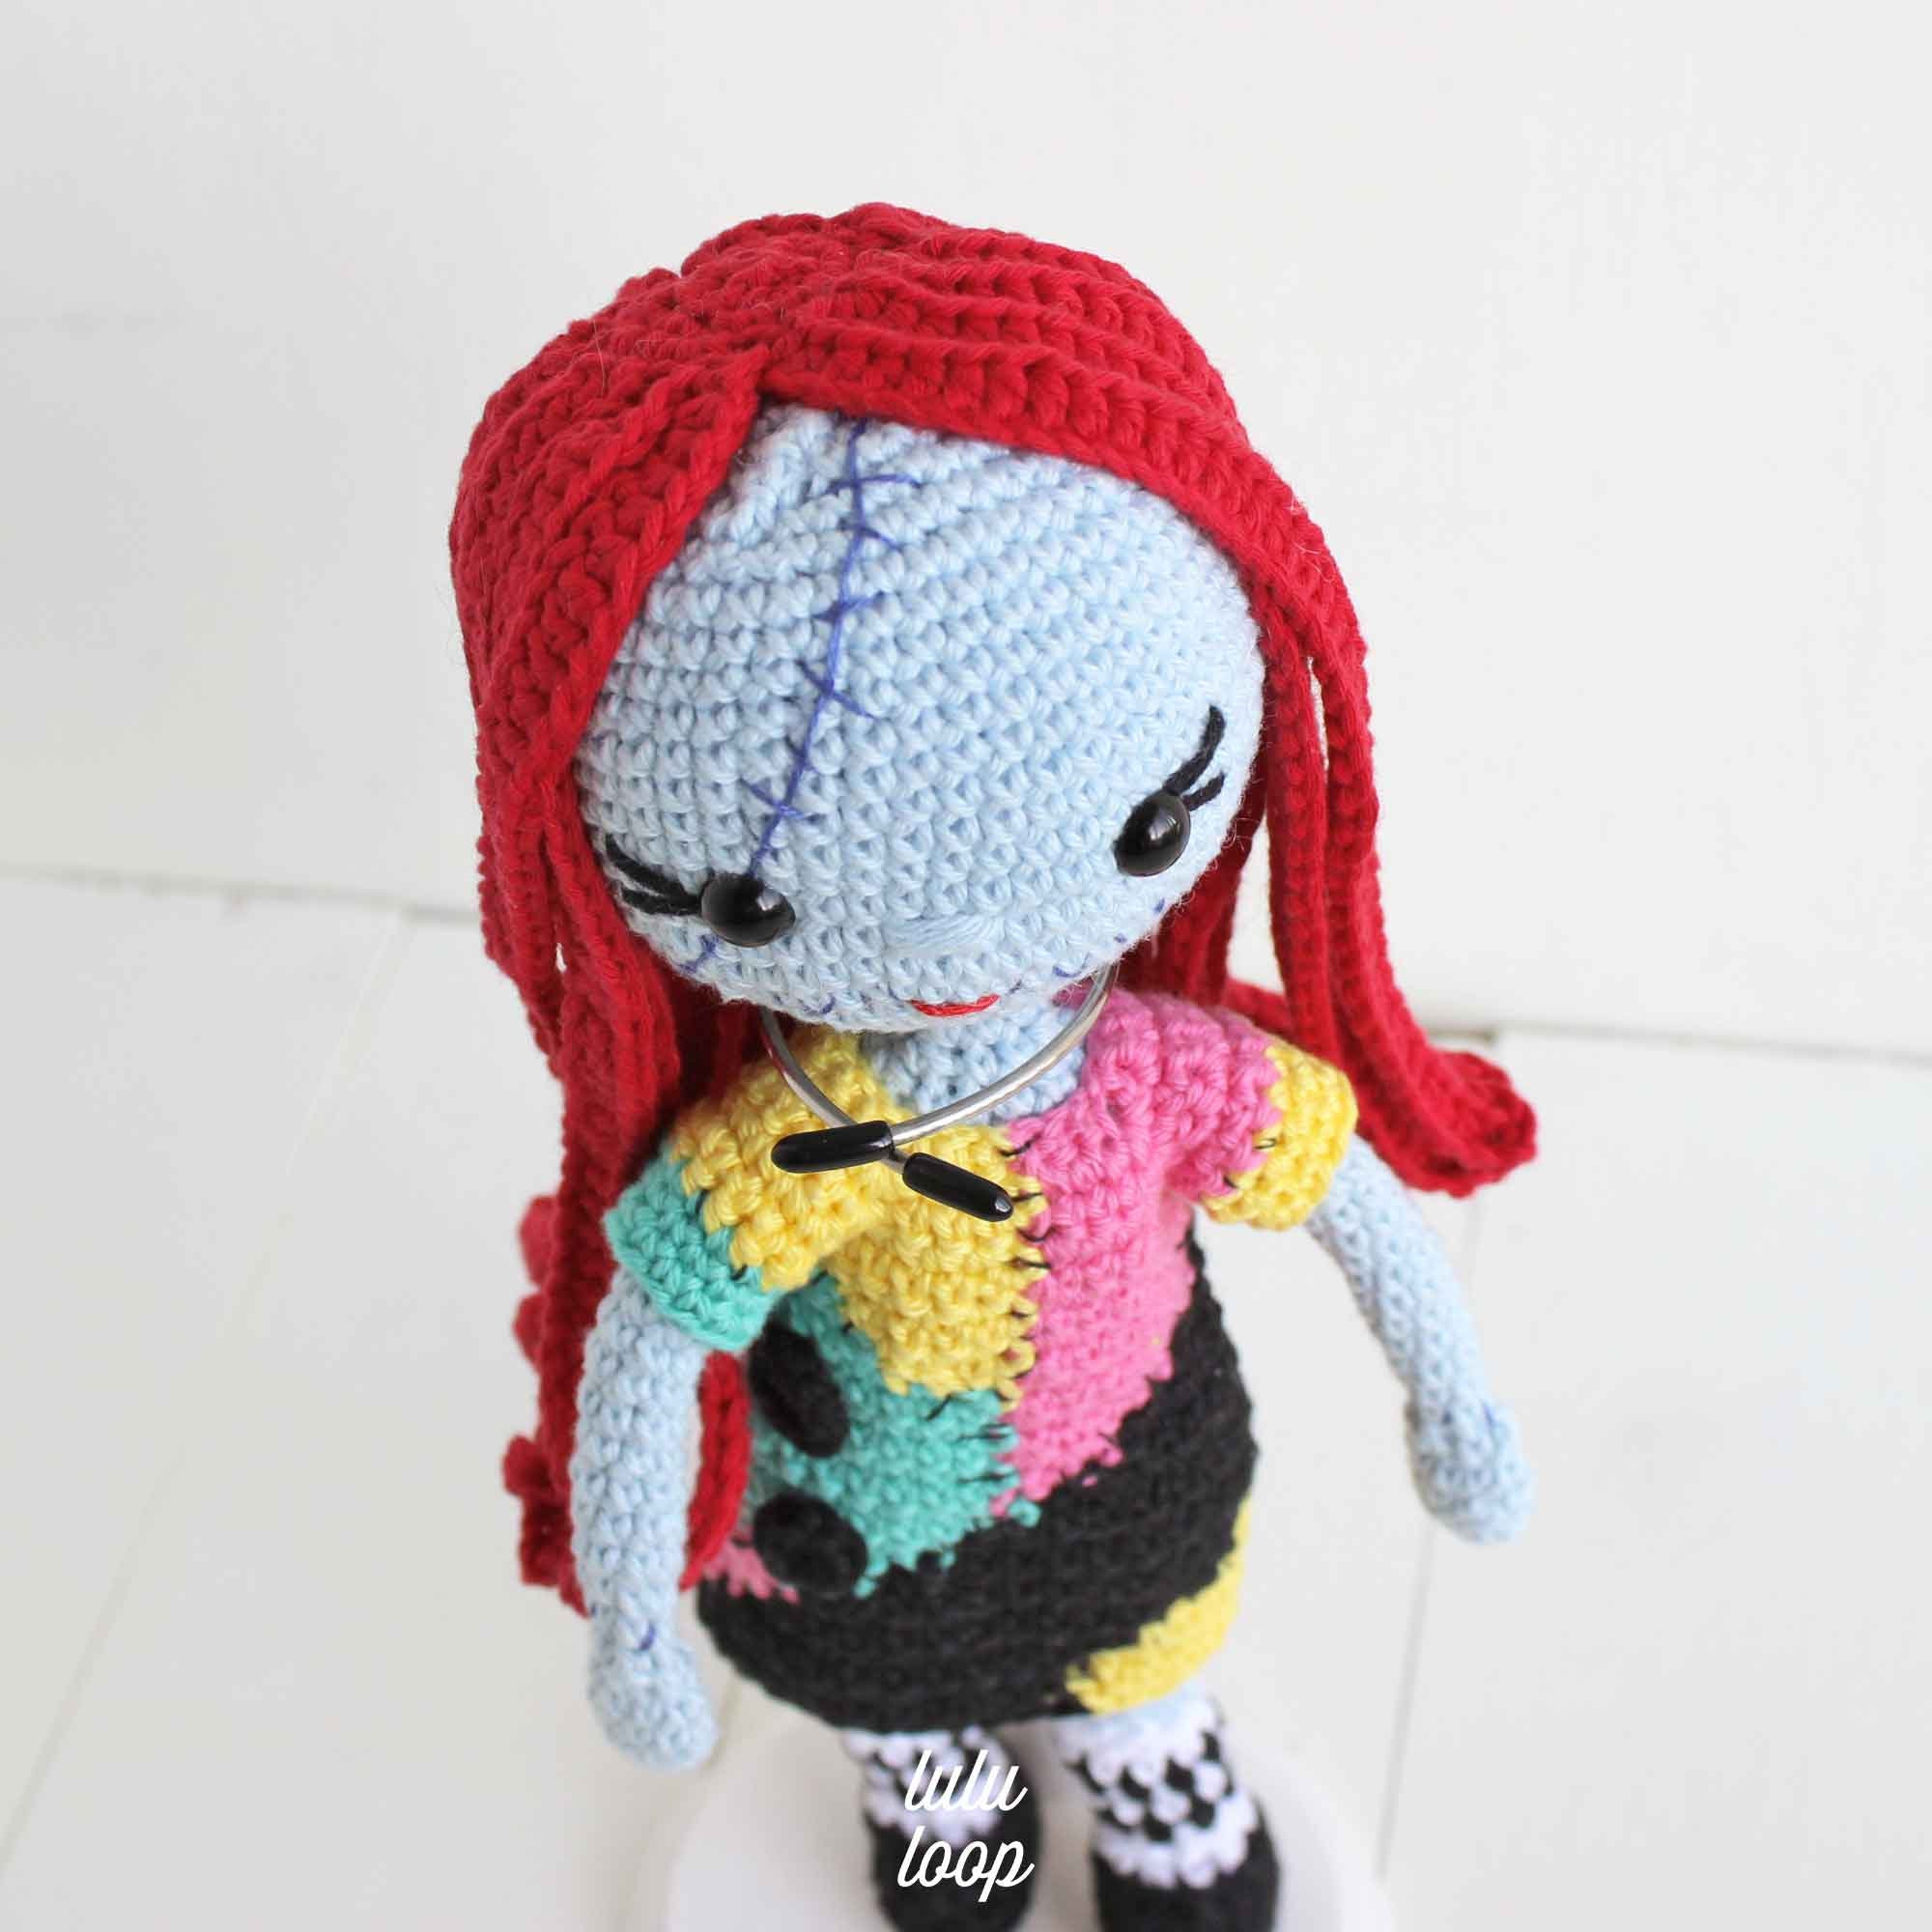 16” Sally Nightmare Before Christmas crochet Doll Amigurumi Large